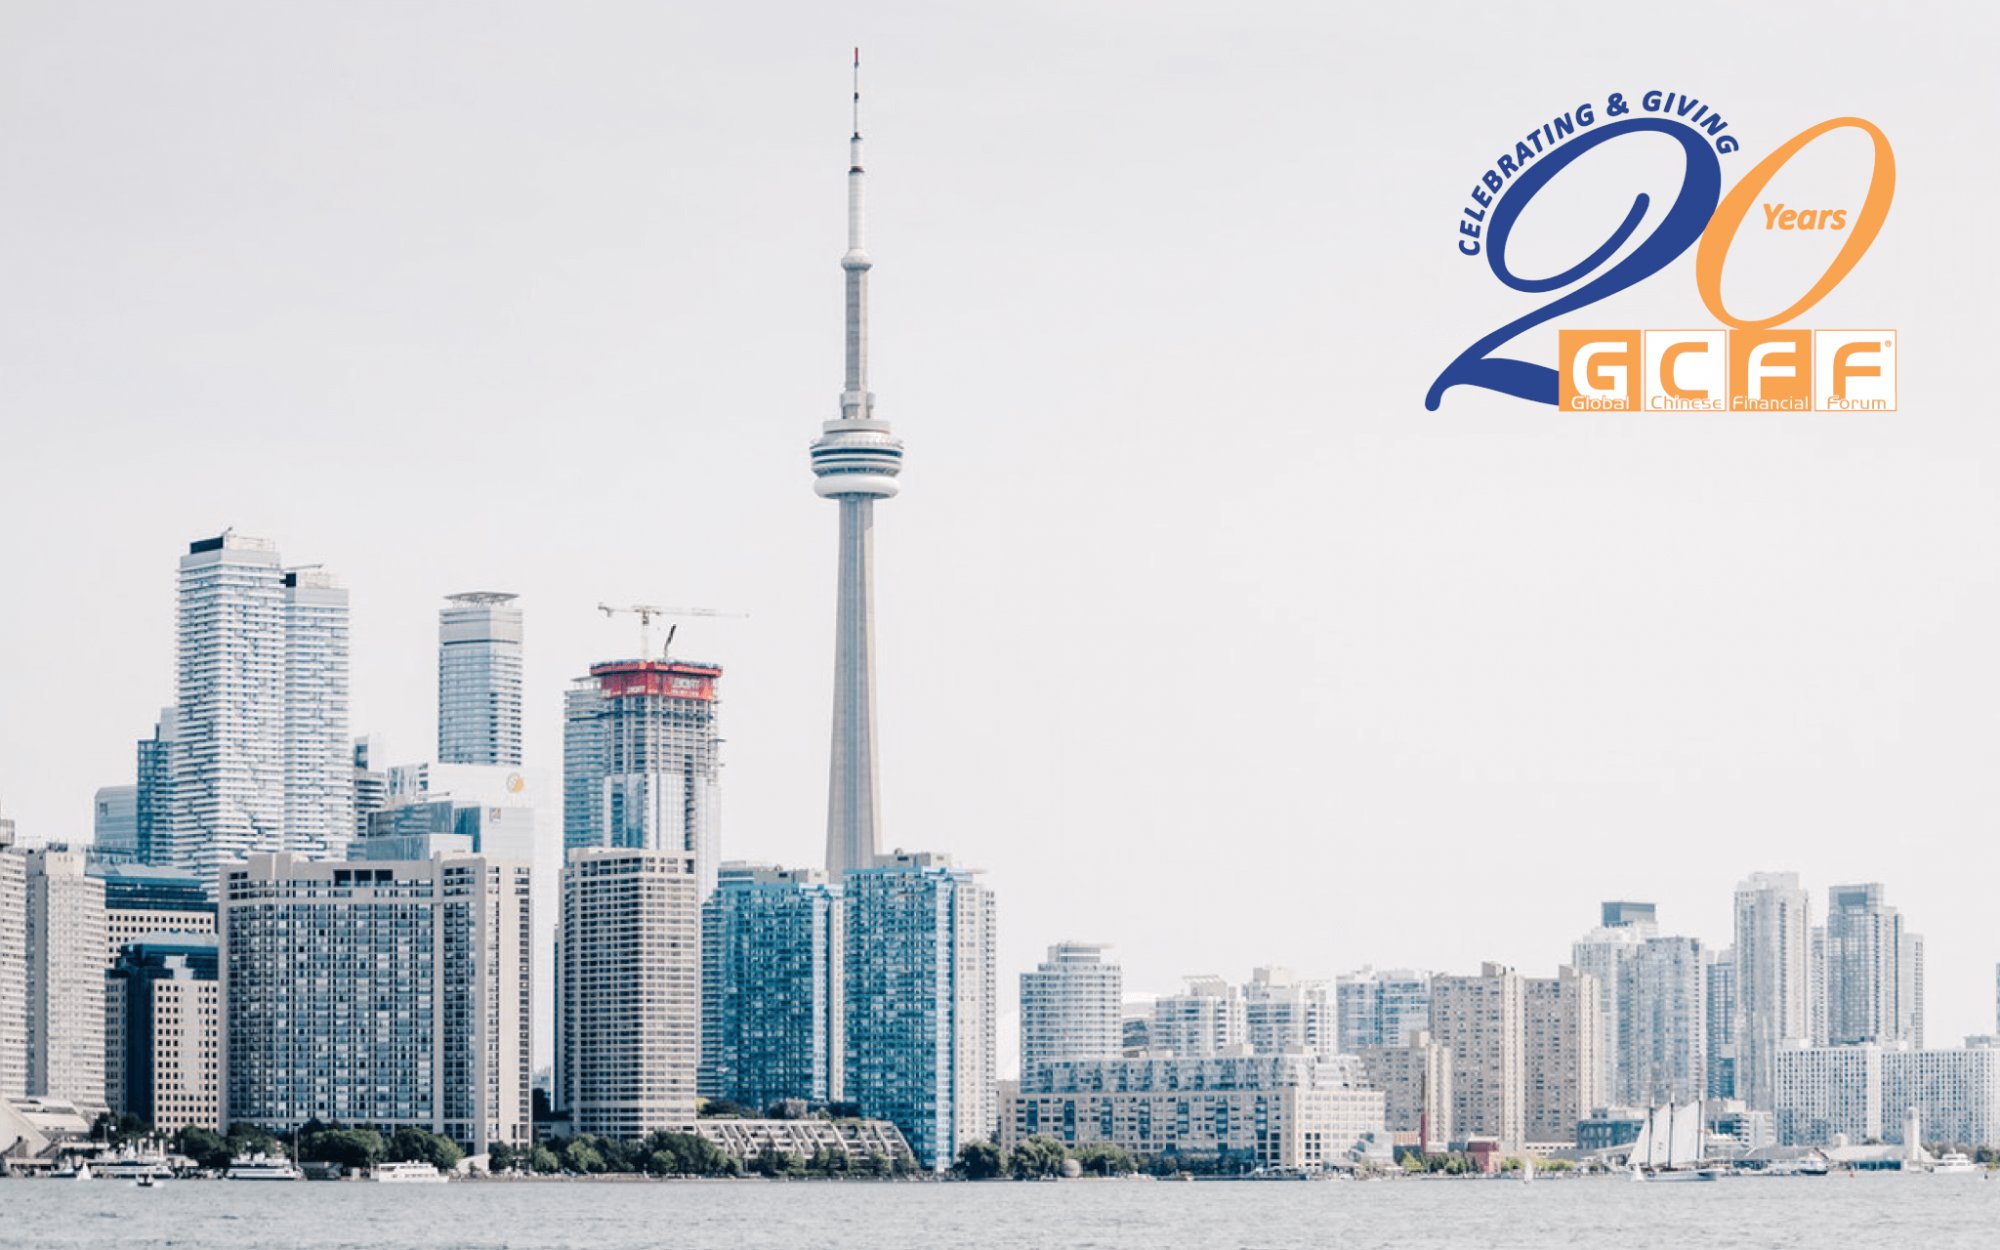 20th Annual GCFF Main Event – Toronto